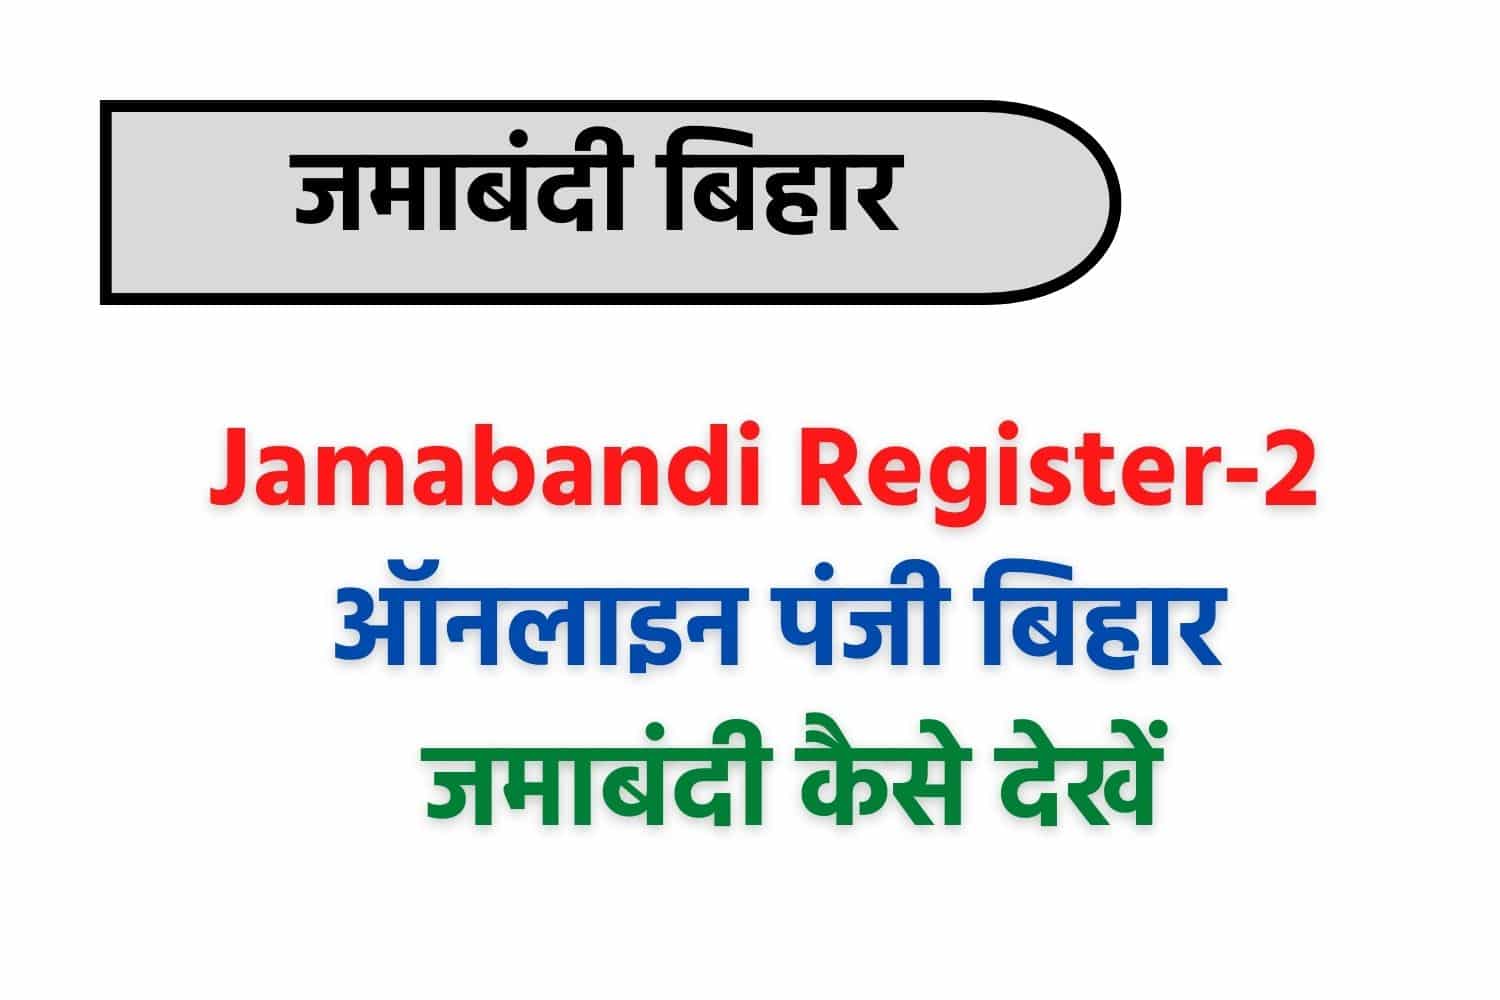 Jamabandi Bihar : Jamabandi Register-2 ऑनलाइन पंजी बिहार जमाबंदी कैसे देखें?